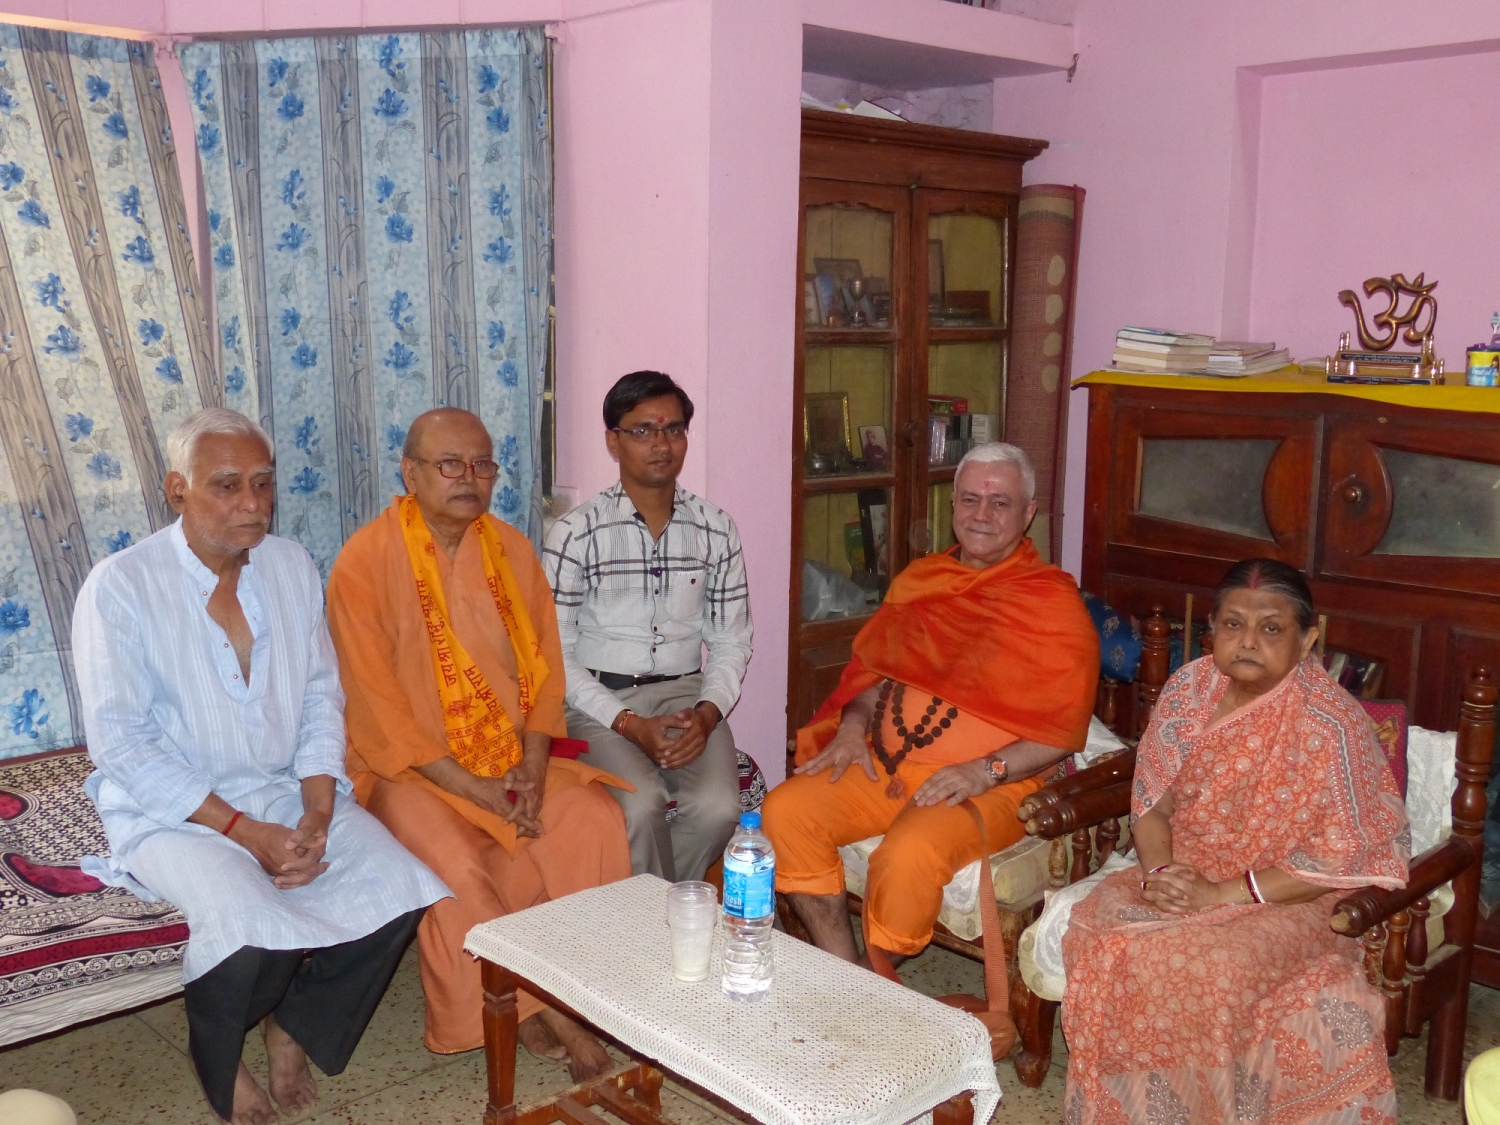 Meeting de H.H. Jagat Guru Amrta Sūryānanda Mahā Rāja with Svámin Malgalteertam - Dehogar, India - 2016, May